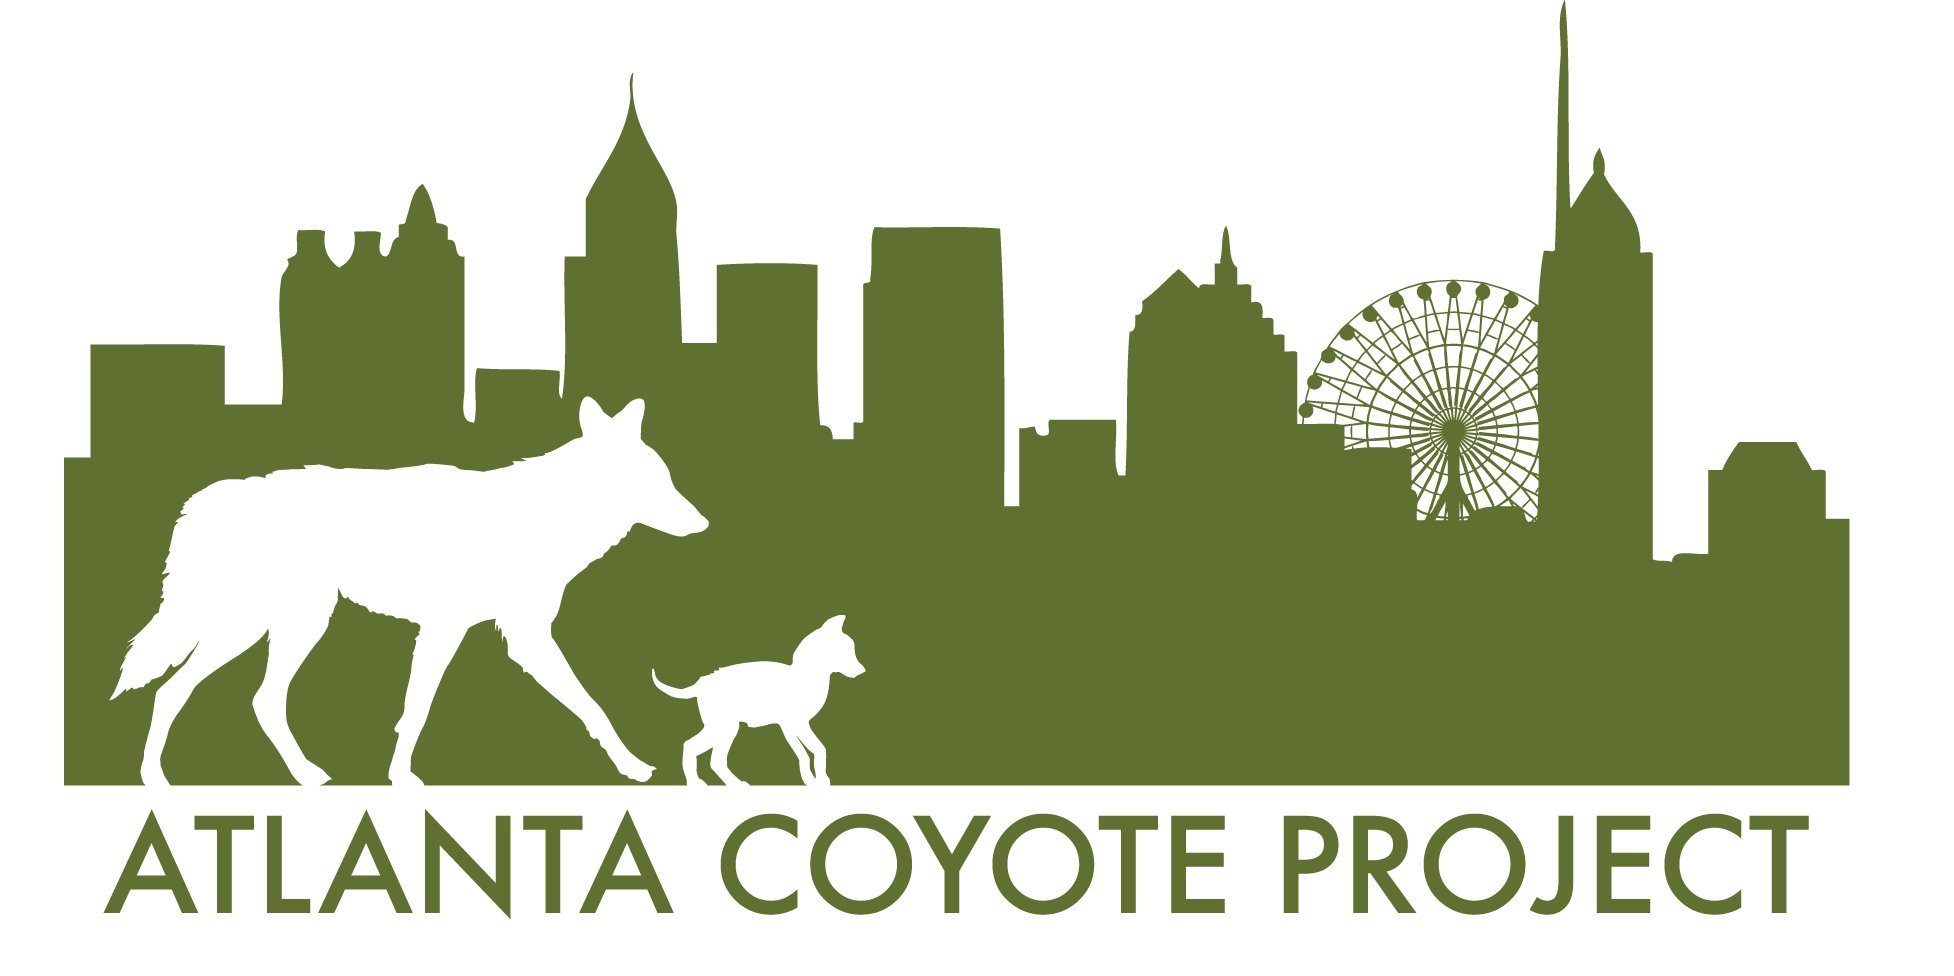 Atlanta_Coyote_Project_logo.jpg